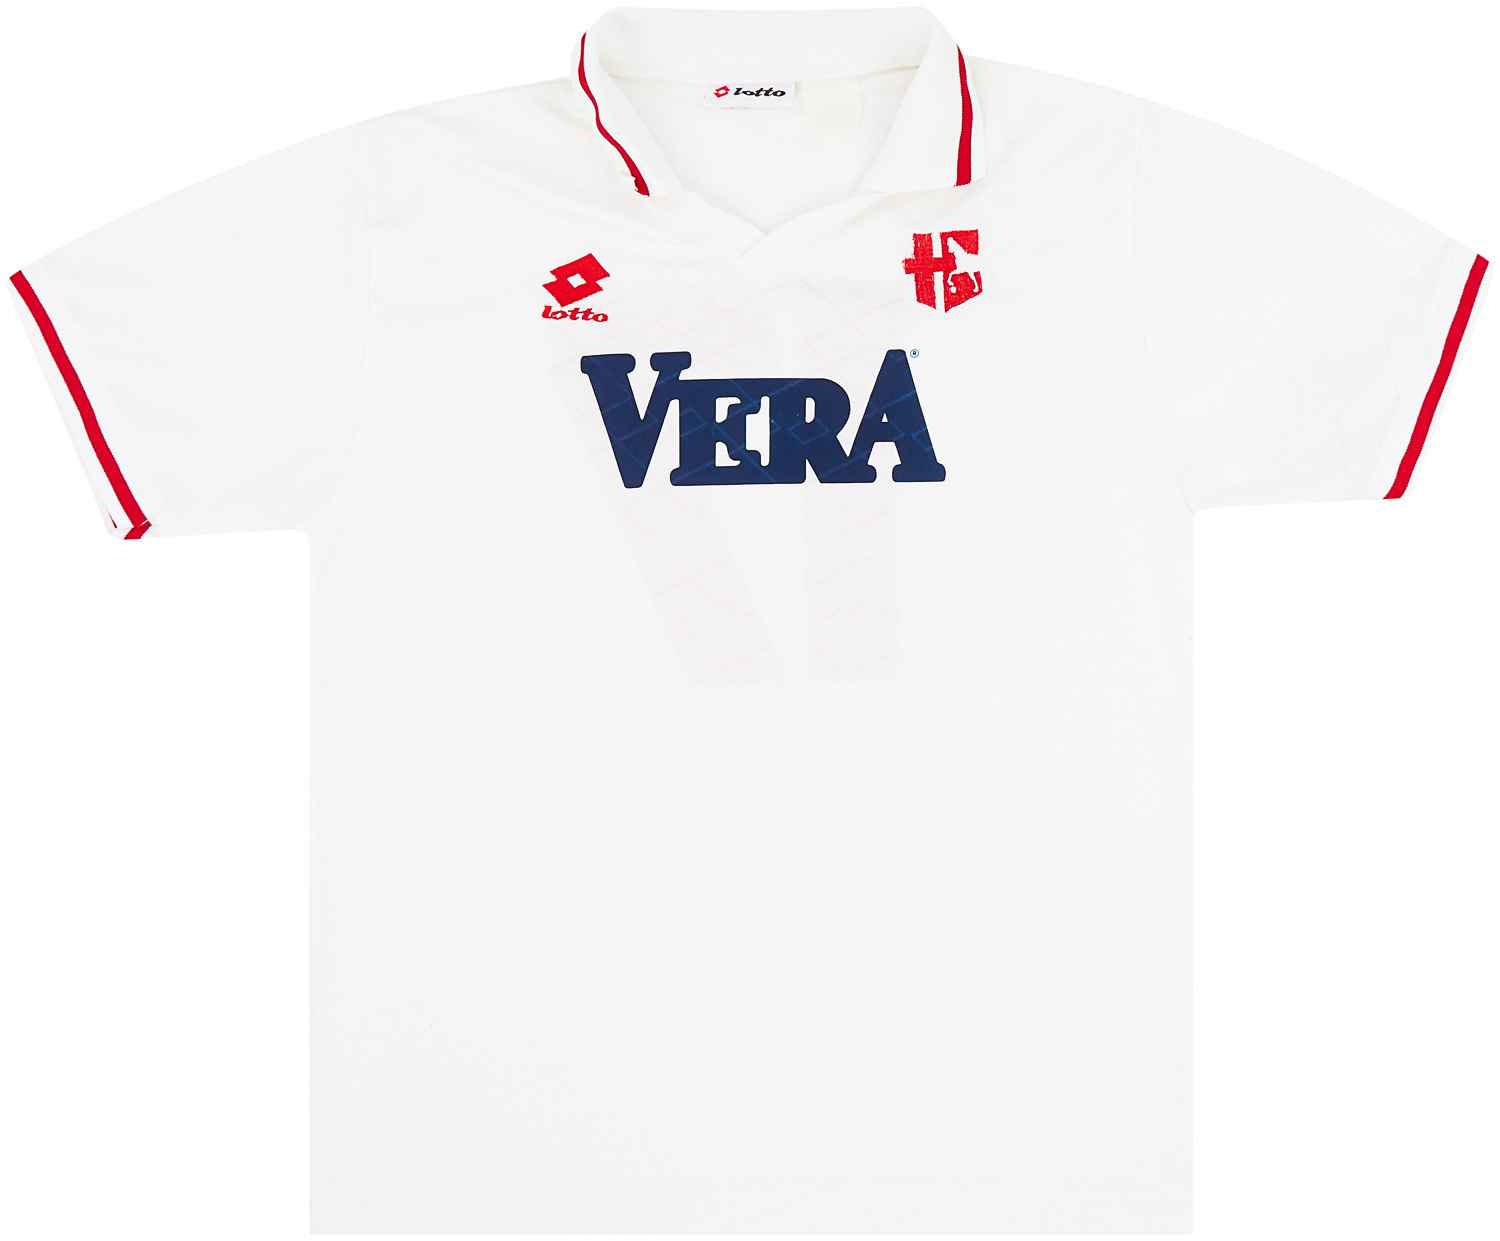 Retro Padova Shirt